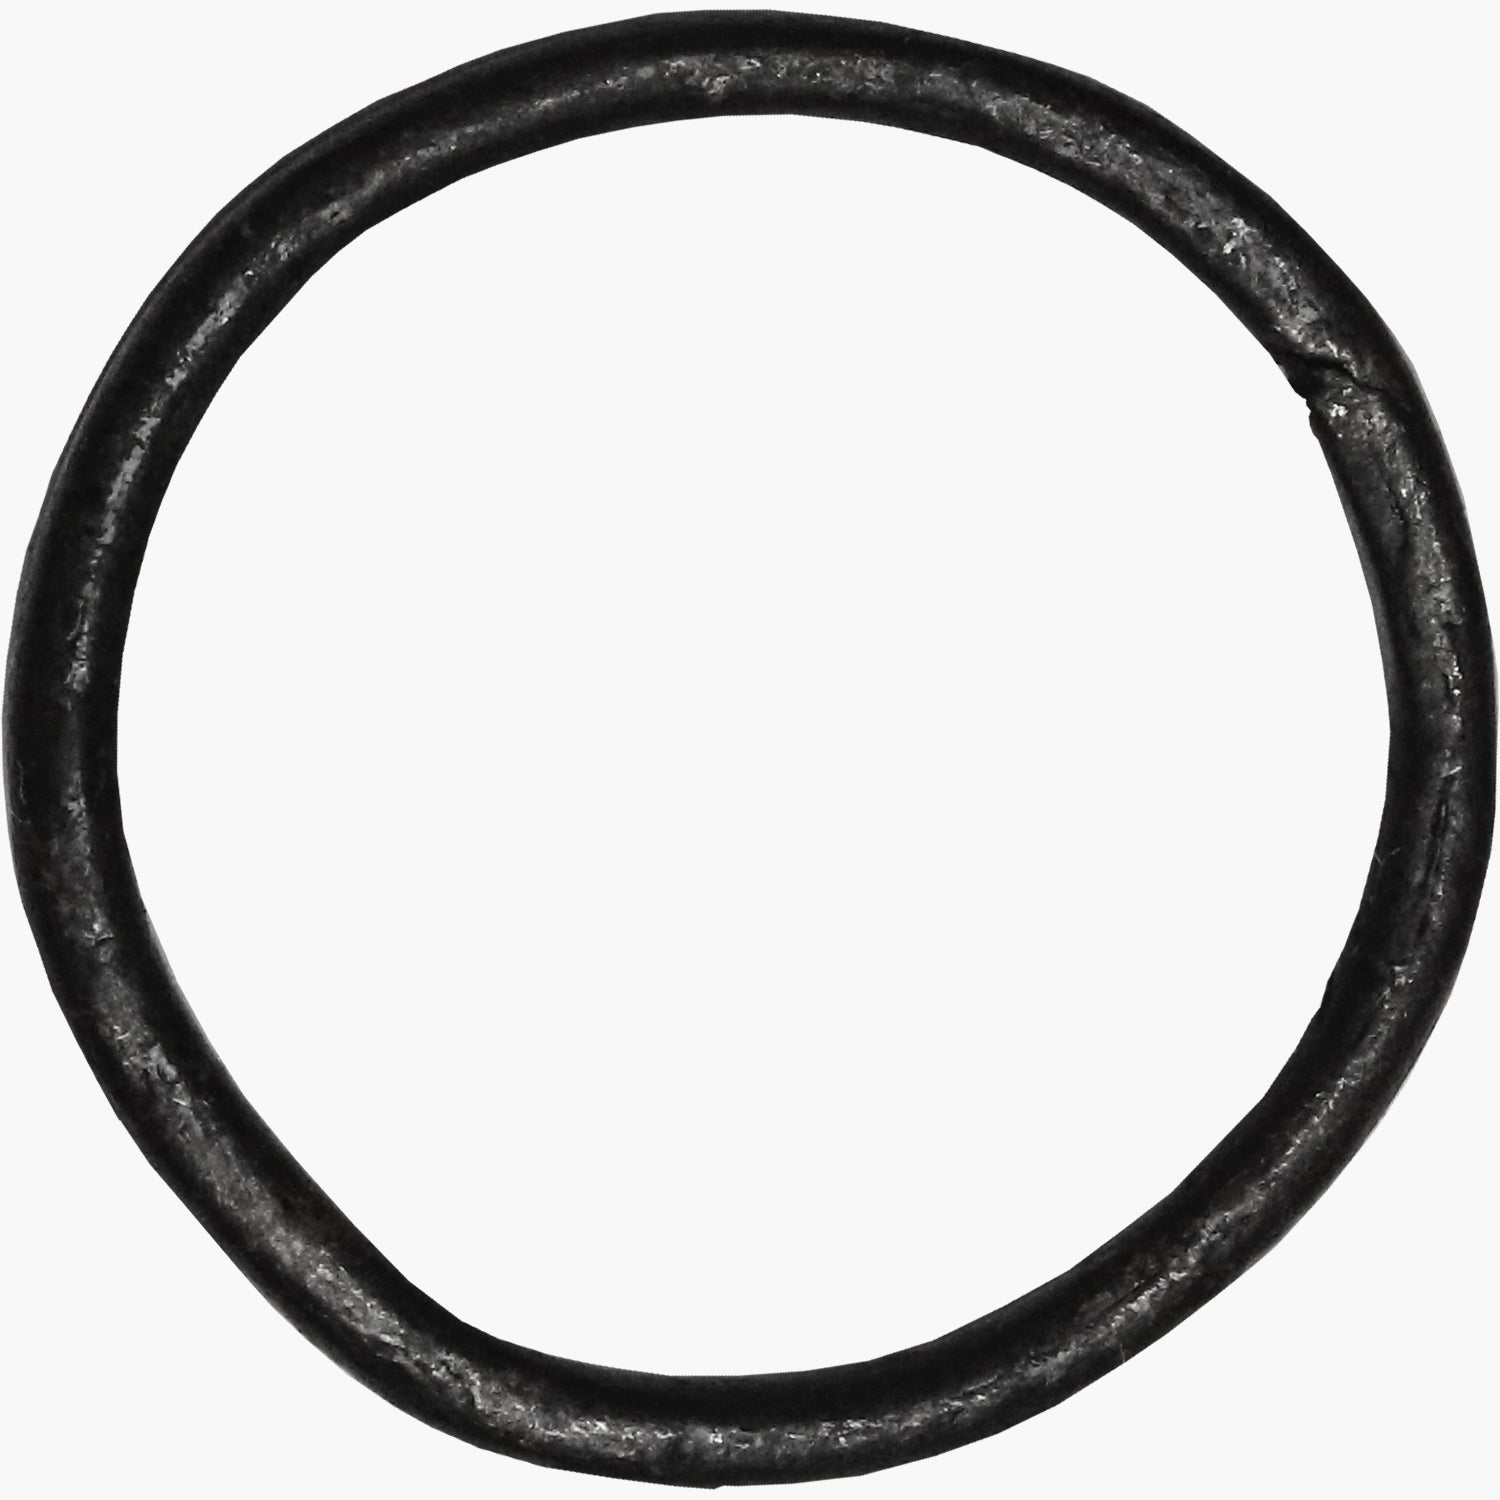 Celtic Bronze Ring A Practical Status Symbol